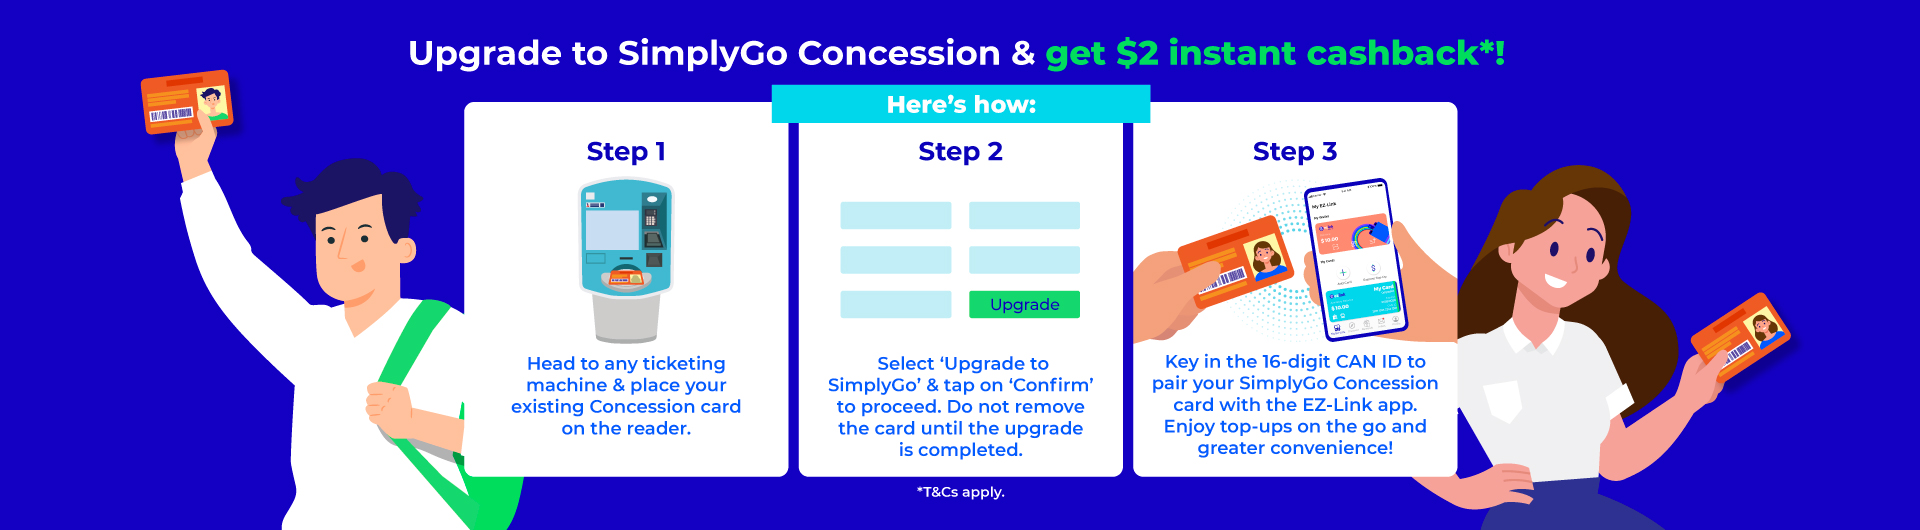 SimplyGo Concession $2 Instant Cashback - EZ-Link